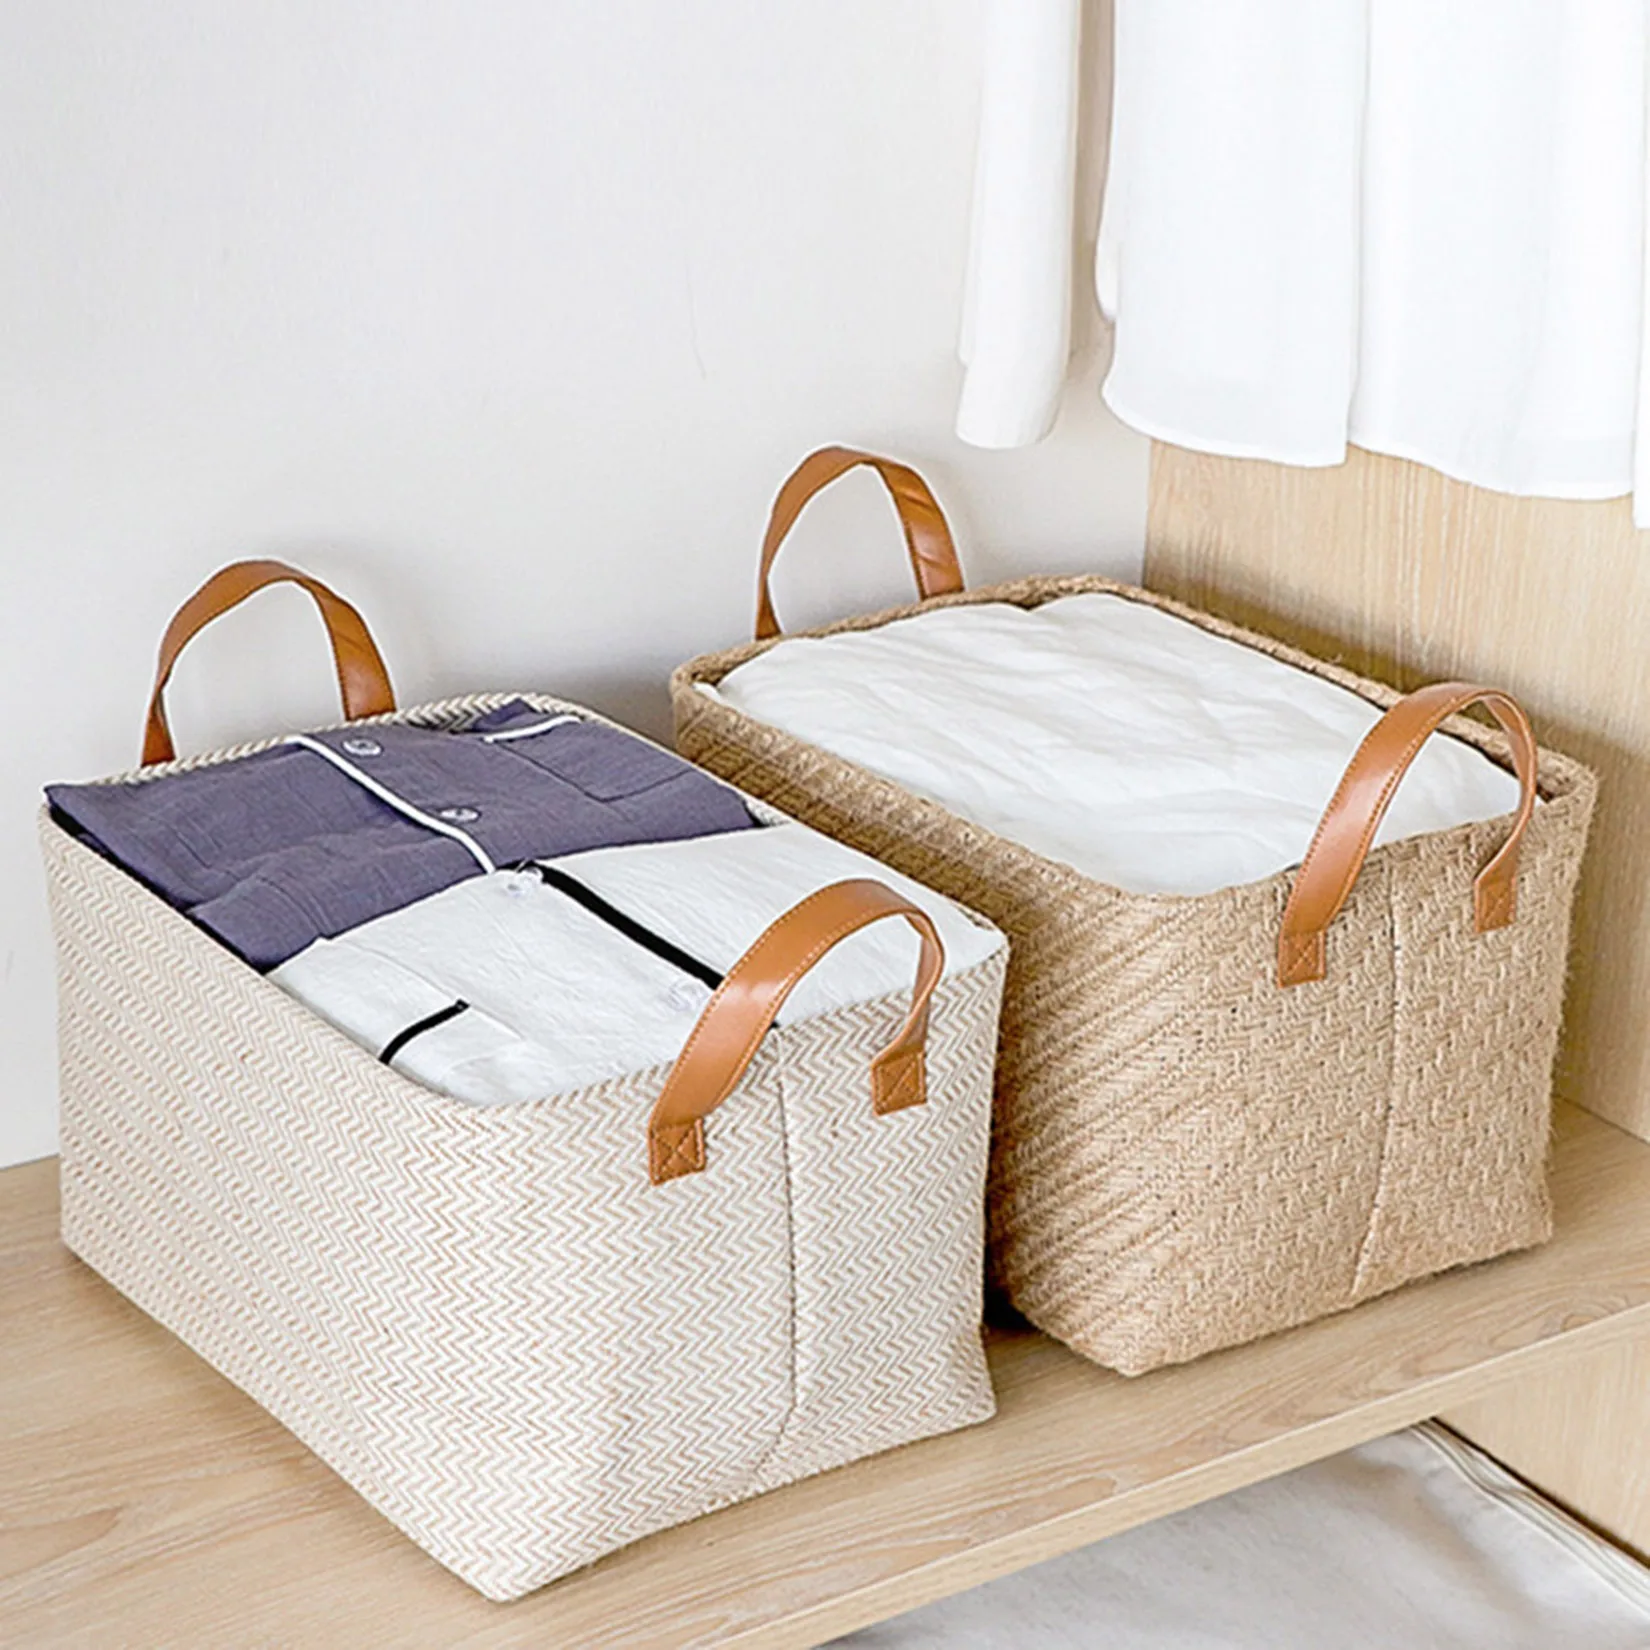 

Box Toys Organizer Eco-friendly Woven Organizer Storage Basket Handles Box Laundry Storage Home Foldable 2pcs Sundries Baskets